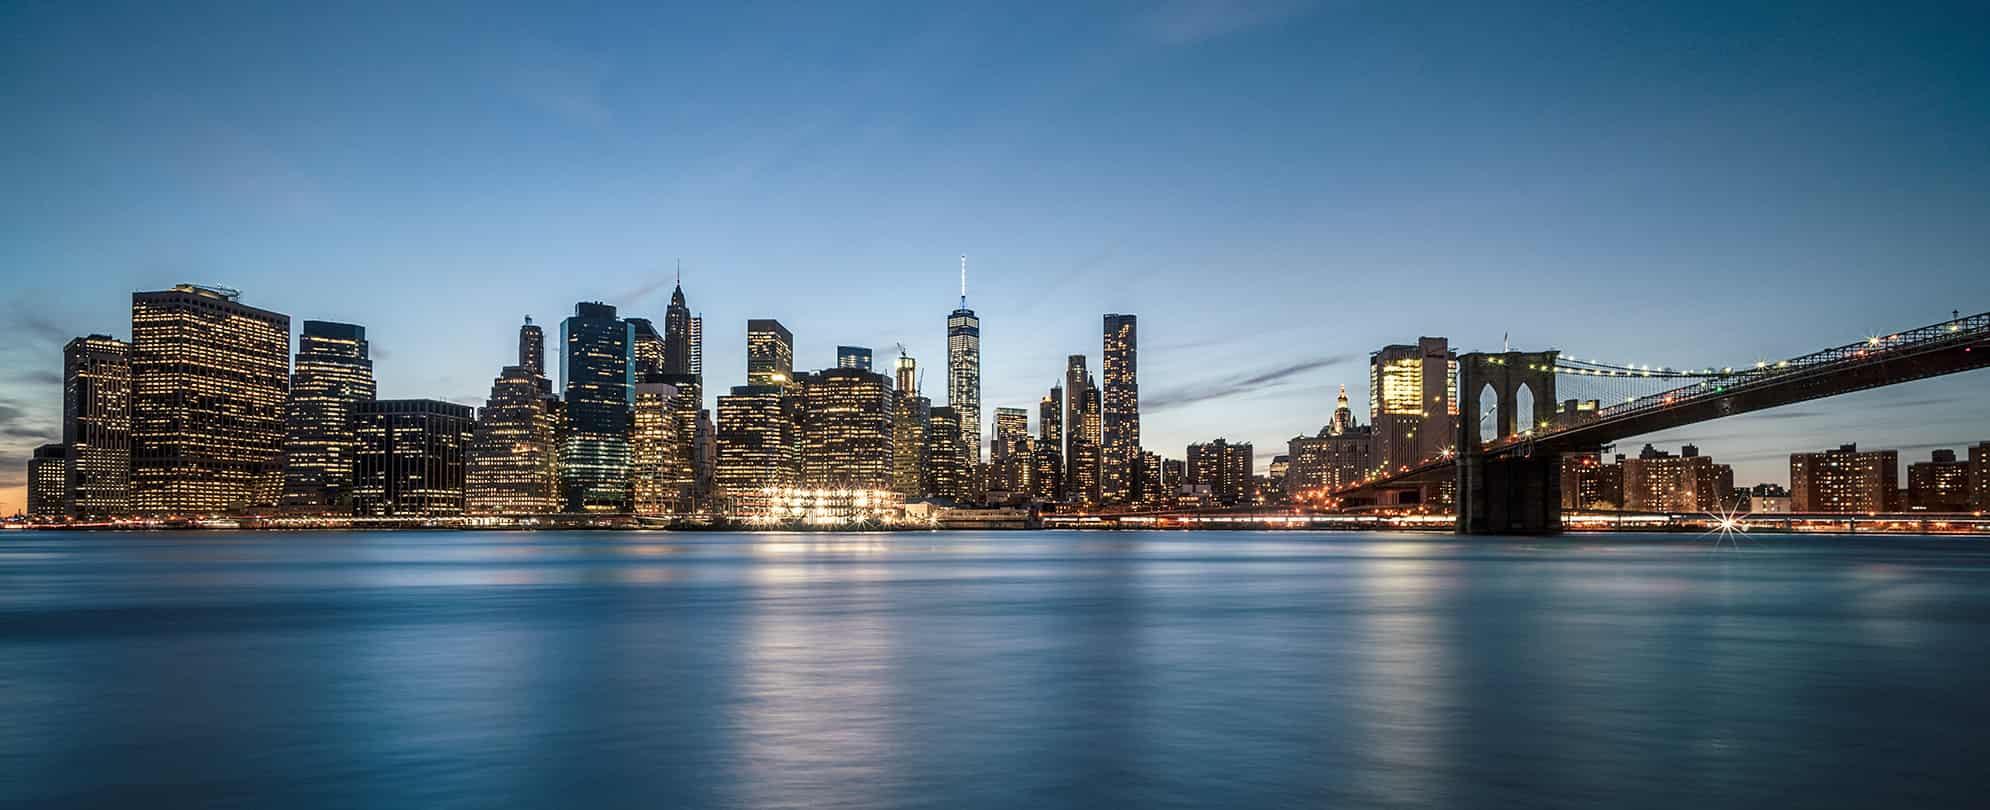 The New York City skyline, Brooklyn Bridge, and East River at dusk